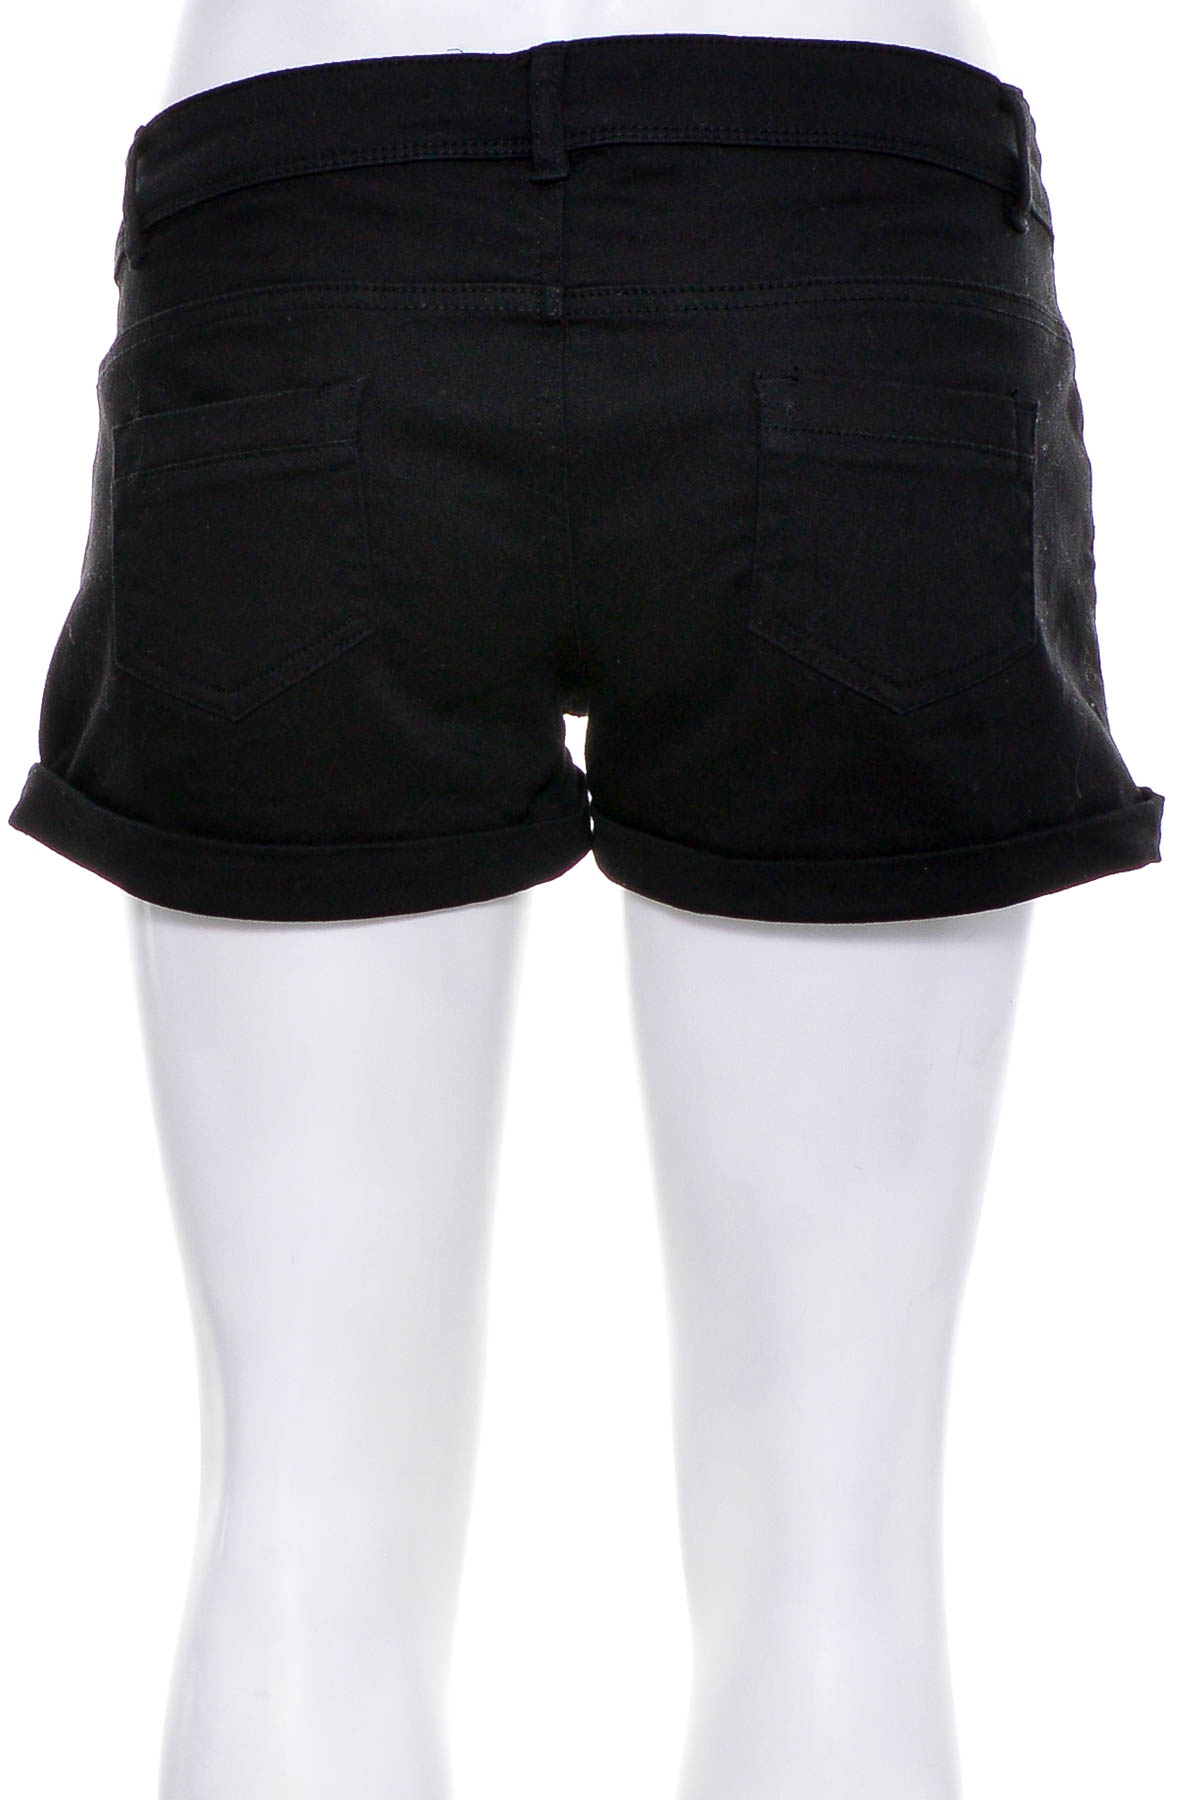 Female shorts - Blind Date - 1